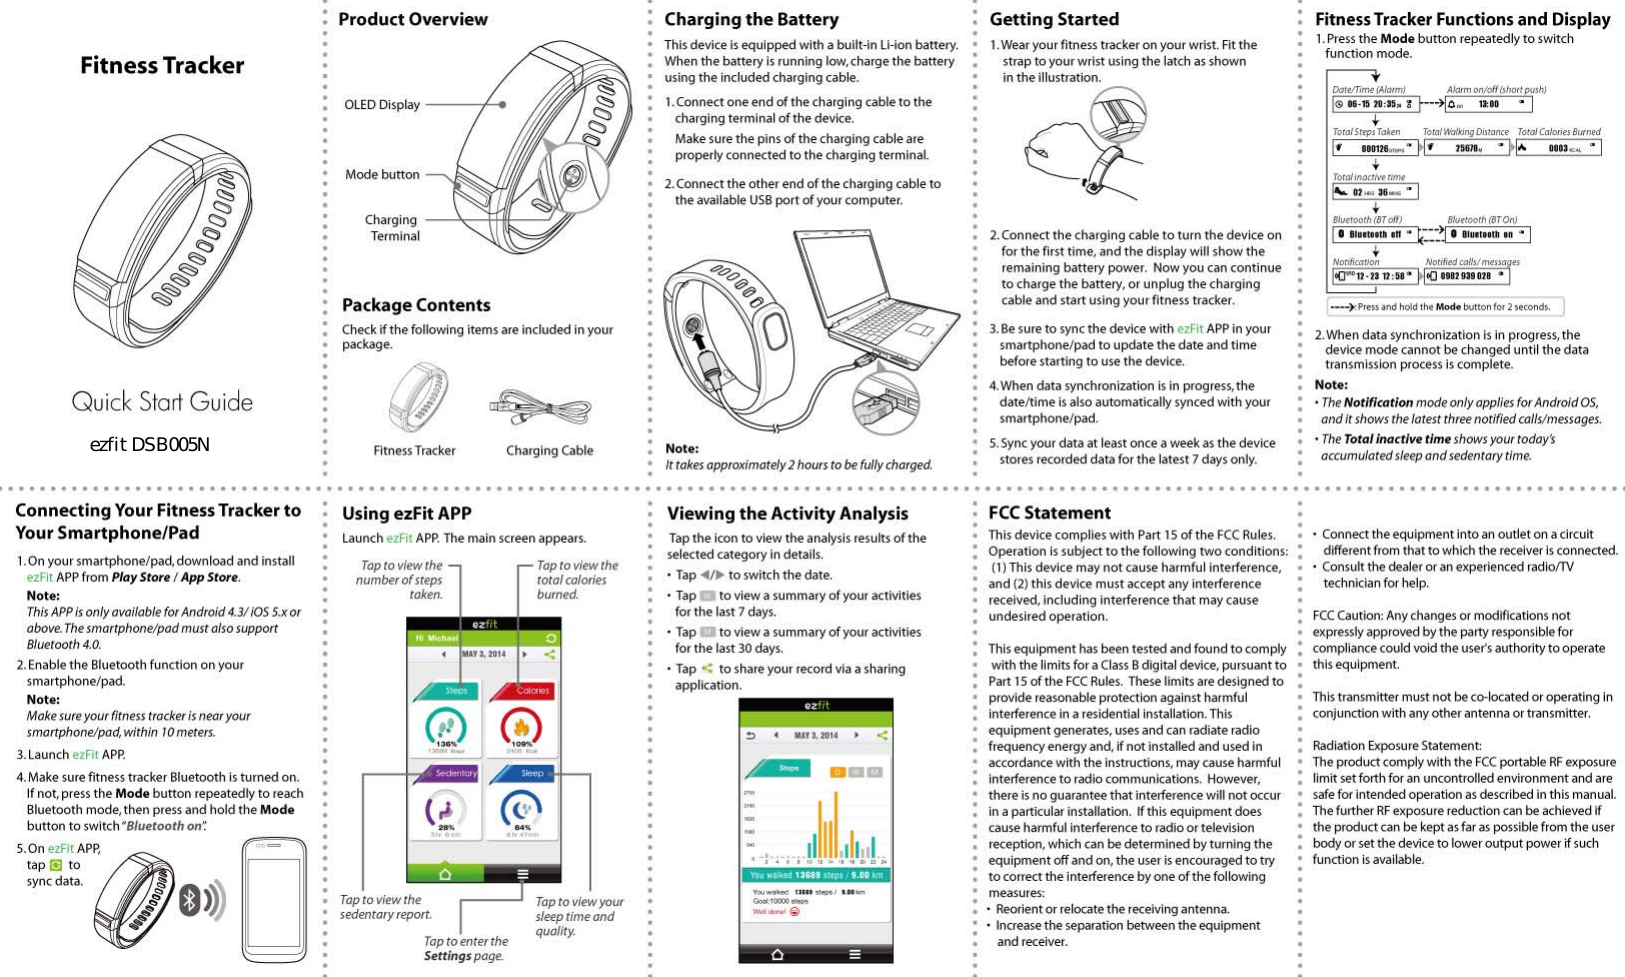 Android user manual. User manual. Samsung user manual пульт управления. Tracker 1 характеристика. Усер мануал модельмк01.